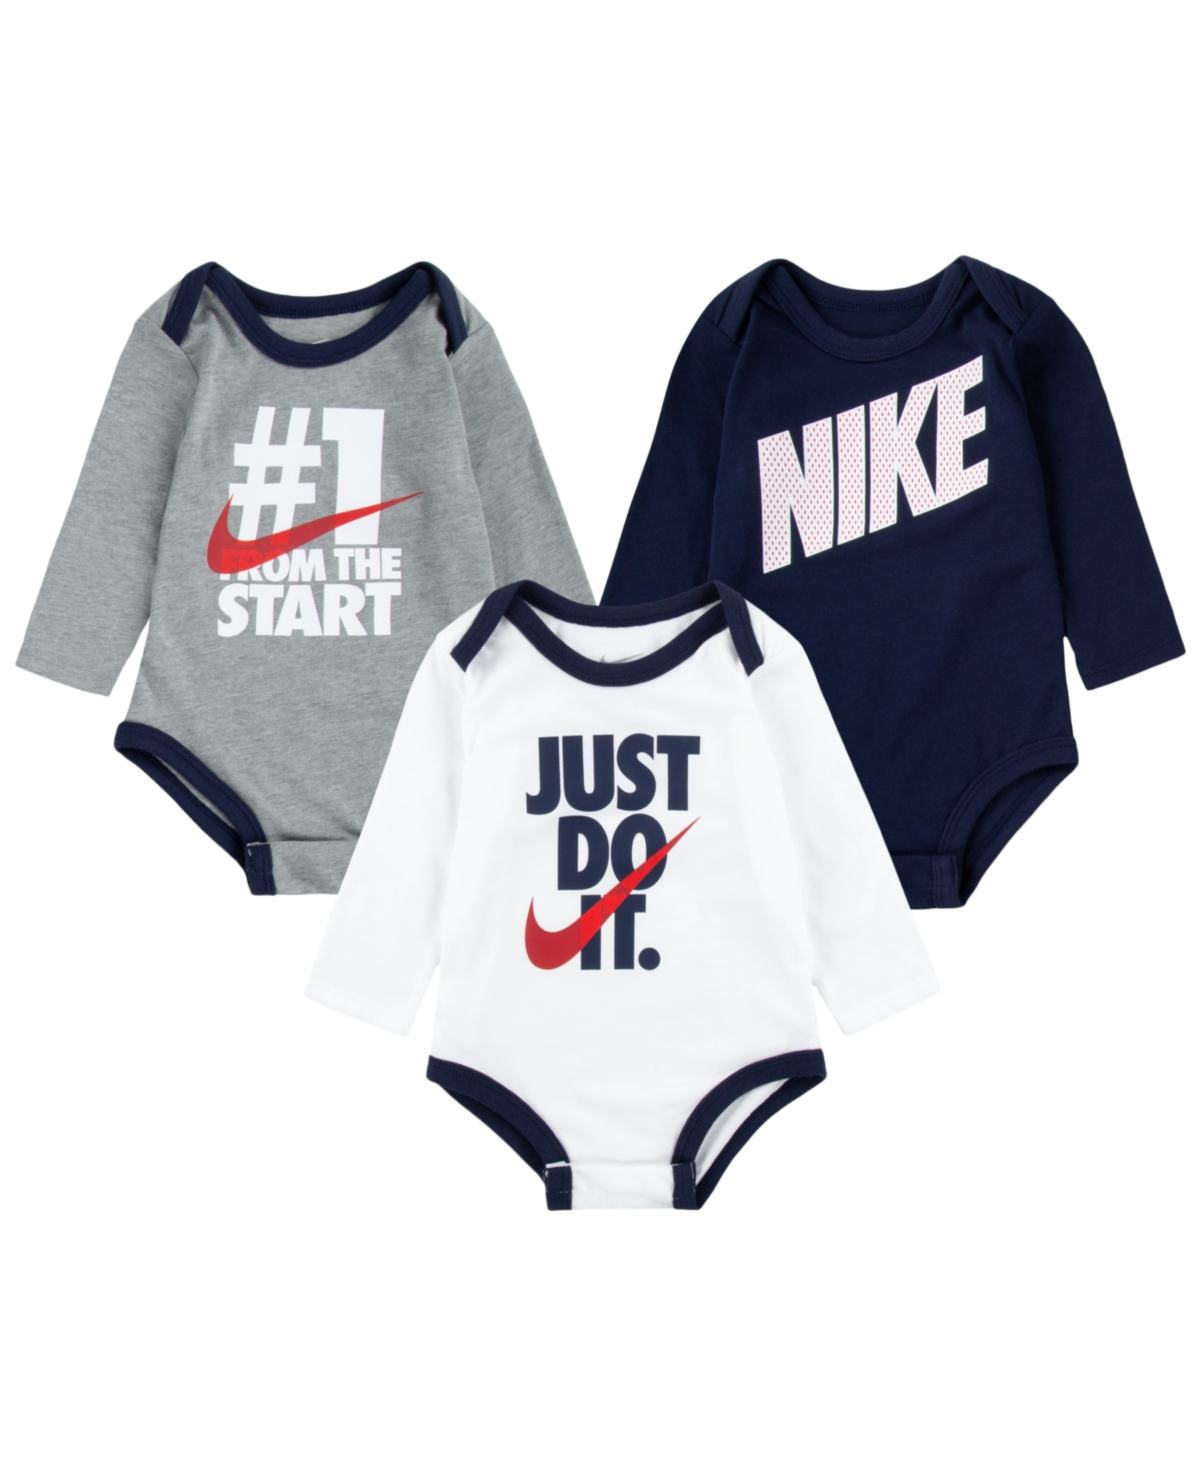 Nike Baby Boys Long Sleeve Bodysuit Set, 3 Pack In Assorted